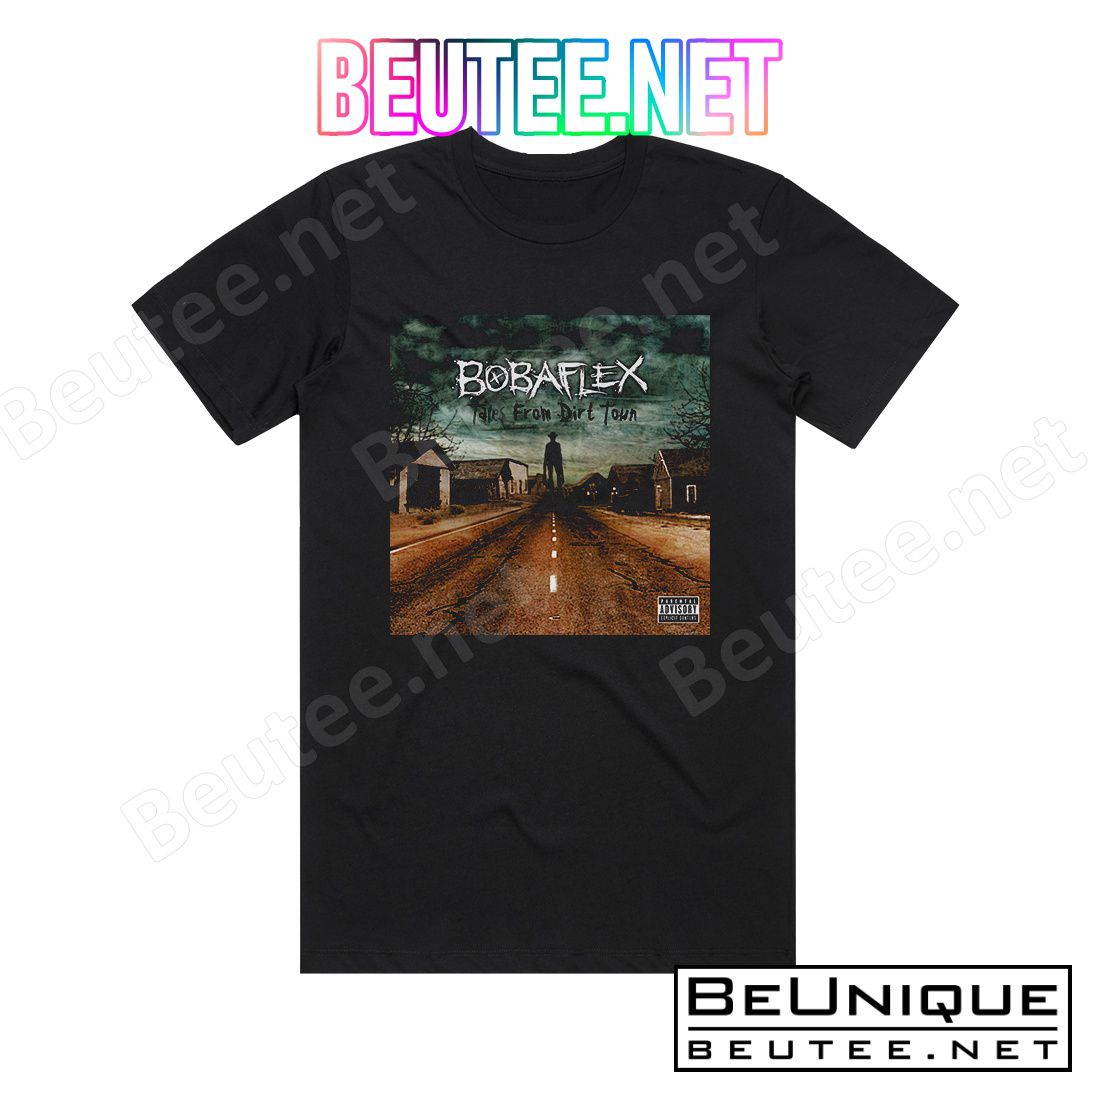 Bobaflex Tales From Dirt Town Album Cover T-Shirt